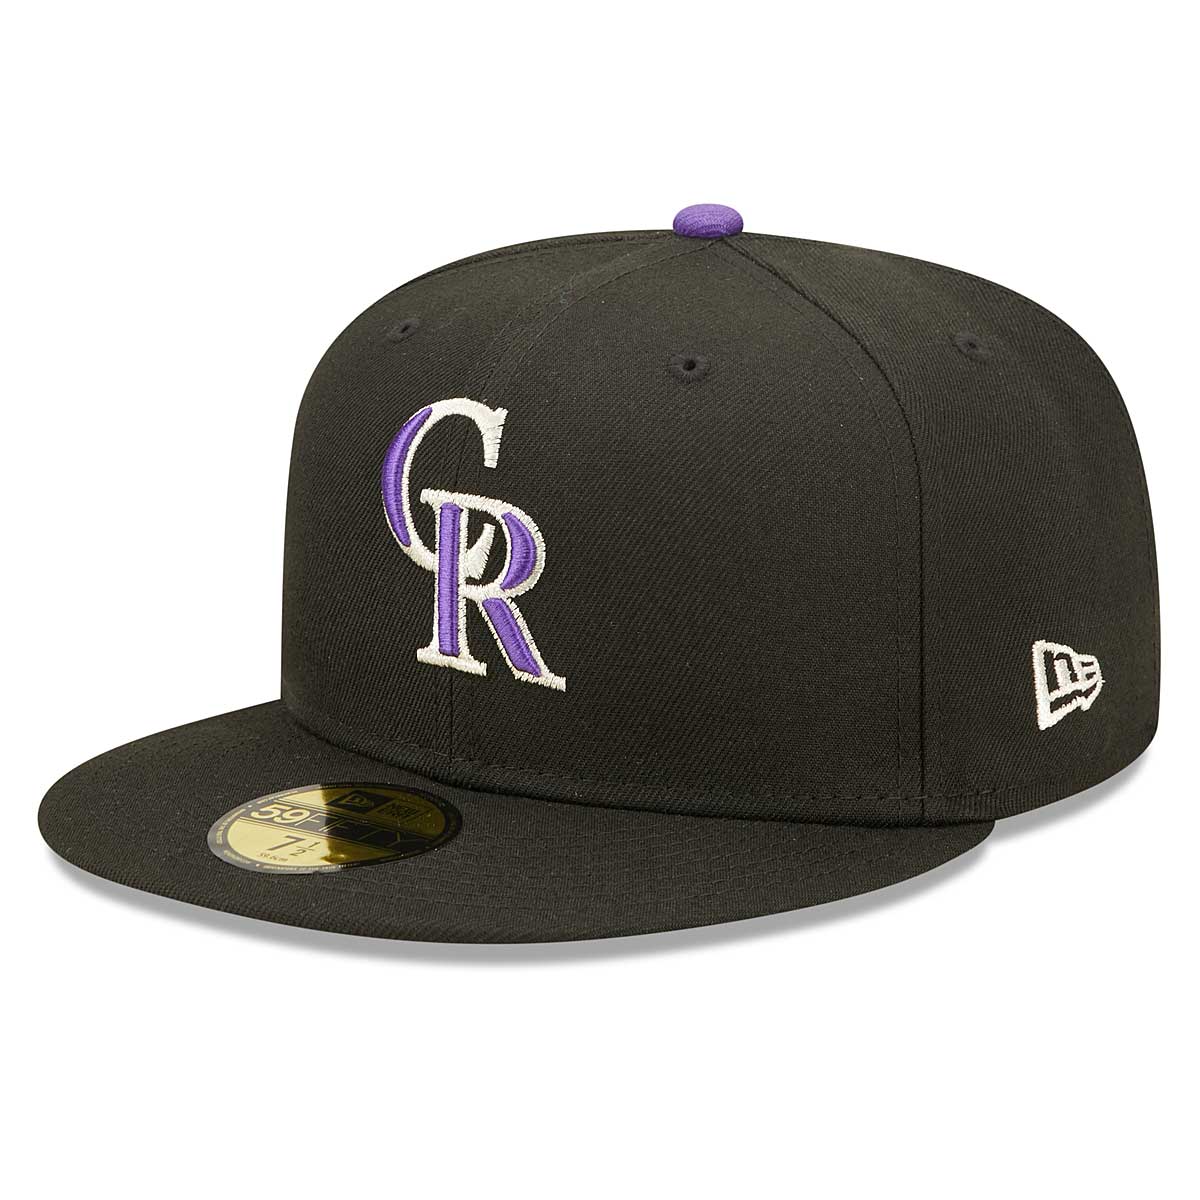 Image of New Era MLB Colorado Rockies Authentic On-field 59fifty Cap, Black